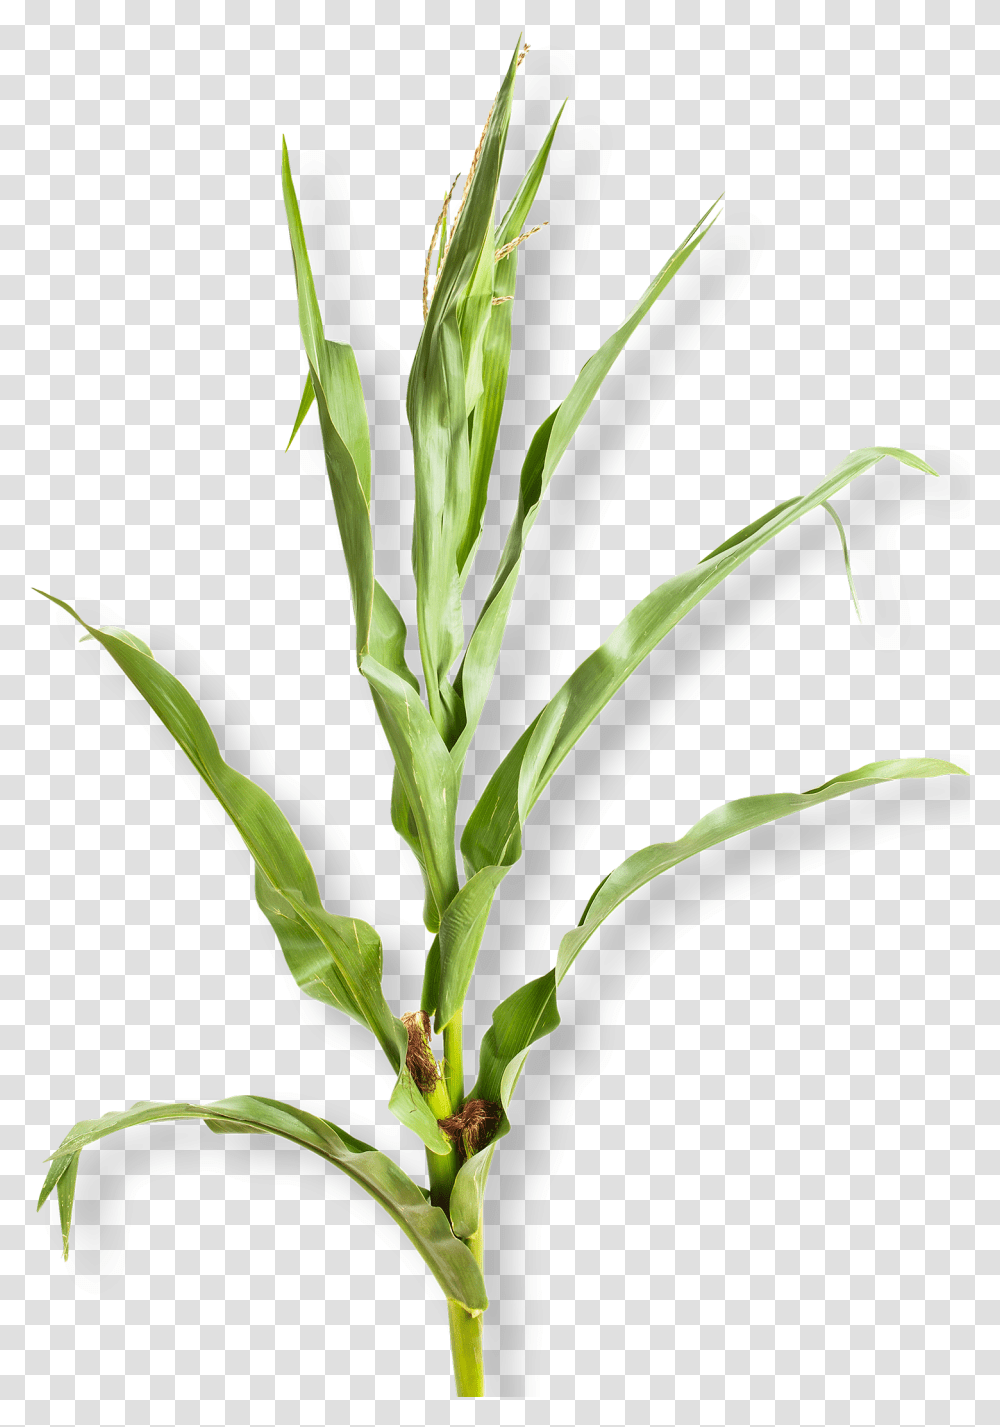 Corn Plant White Background Download Corn Plant White Background, Flower, Food, Vegetable Transparent Png